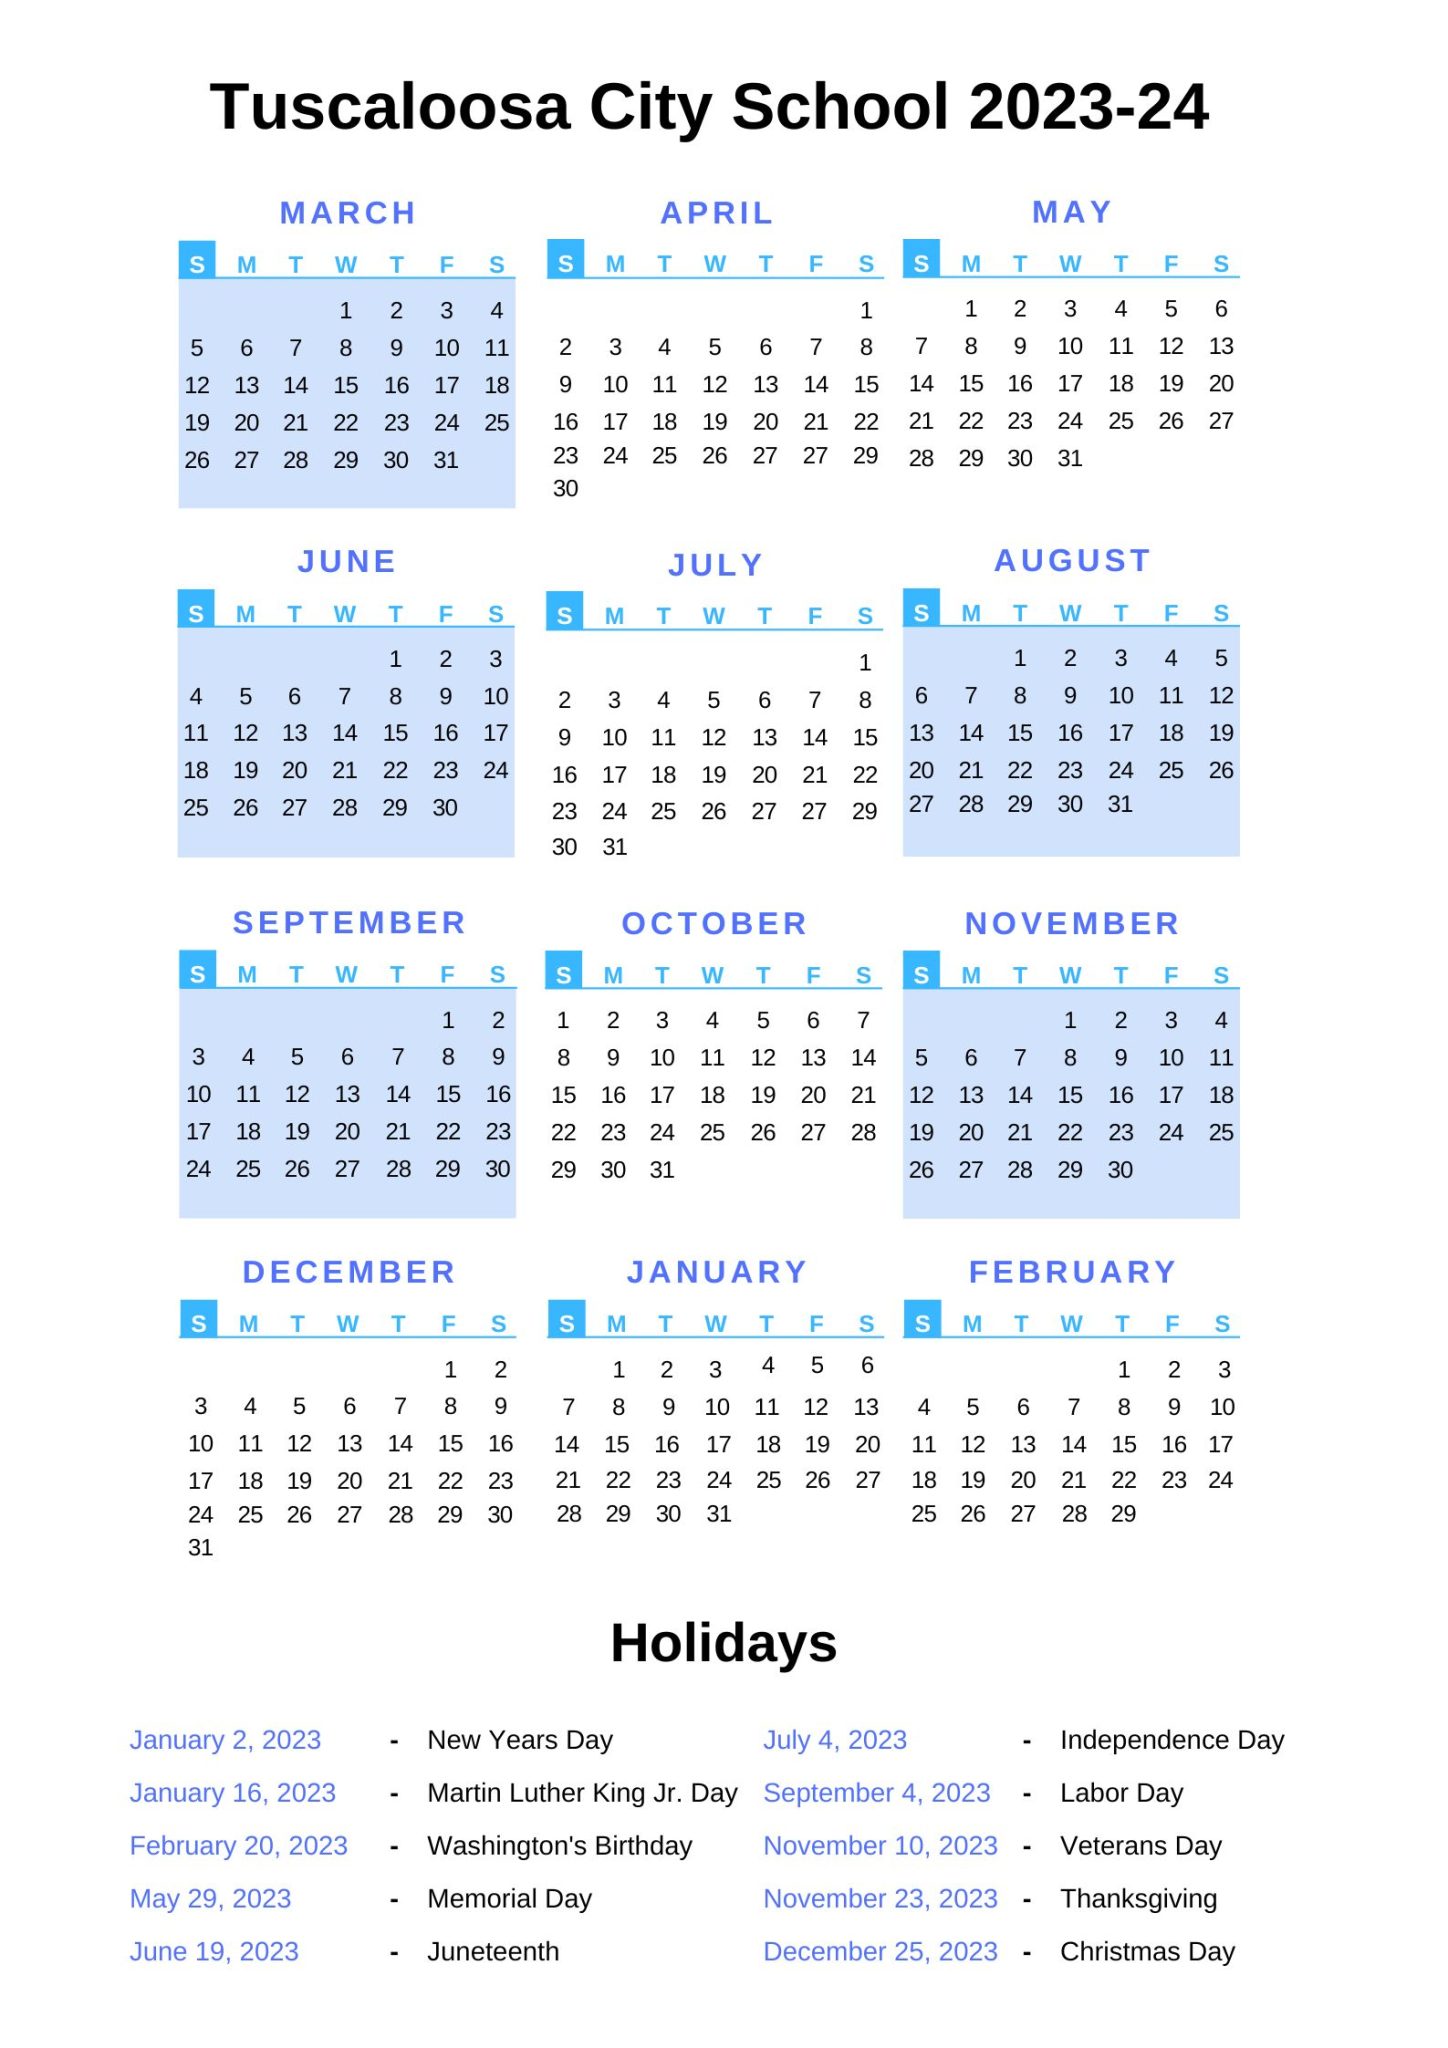 tuscaloosa-city-schools-calendar-2023-24-with-holidays